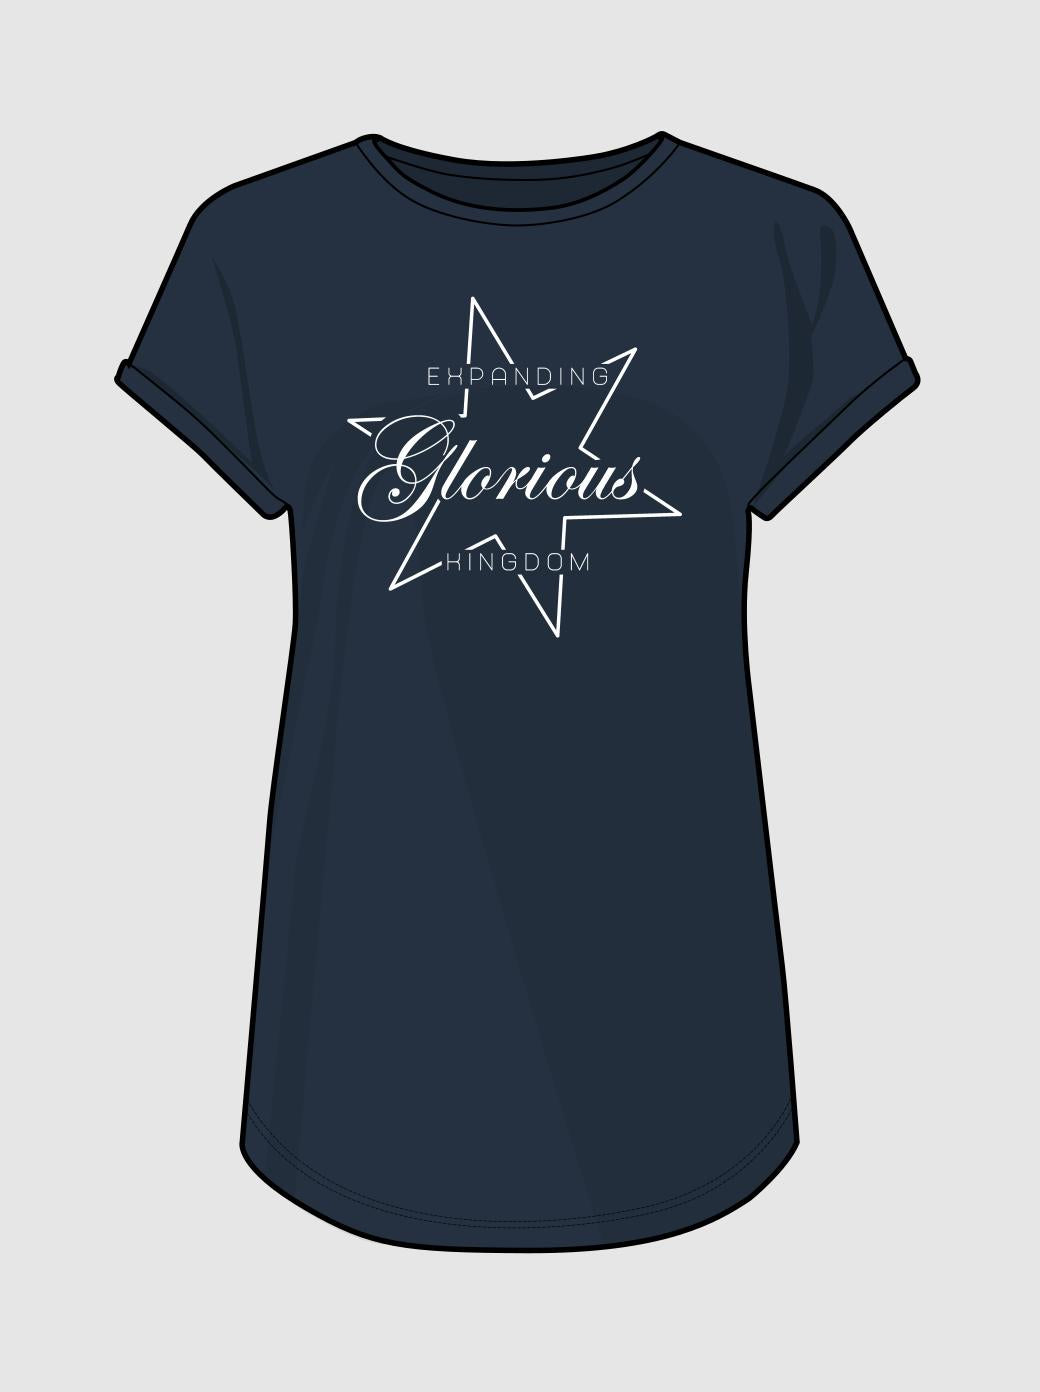 Frauen T-Shirt - Expanding Glorious Kingdom